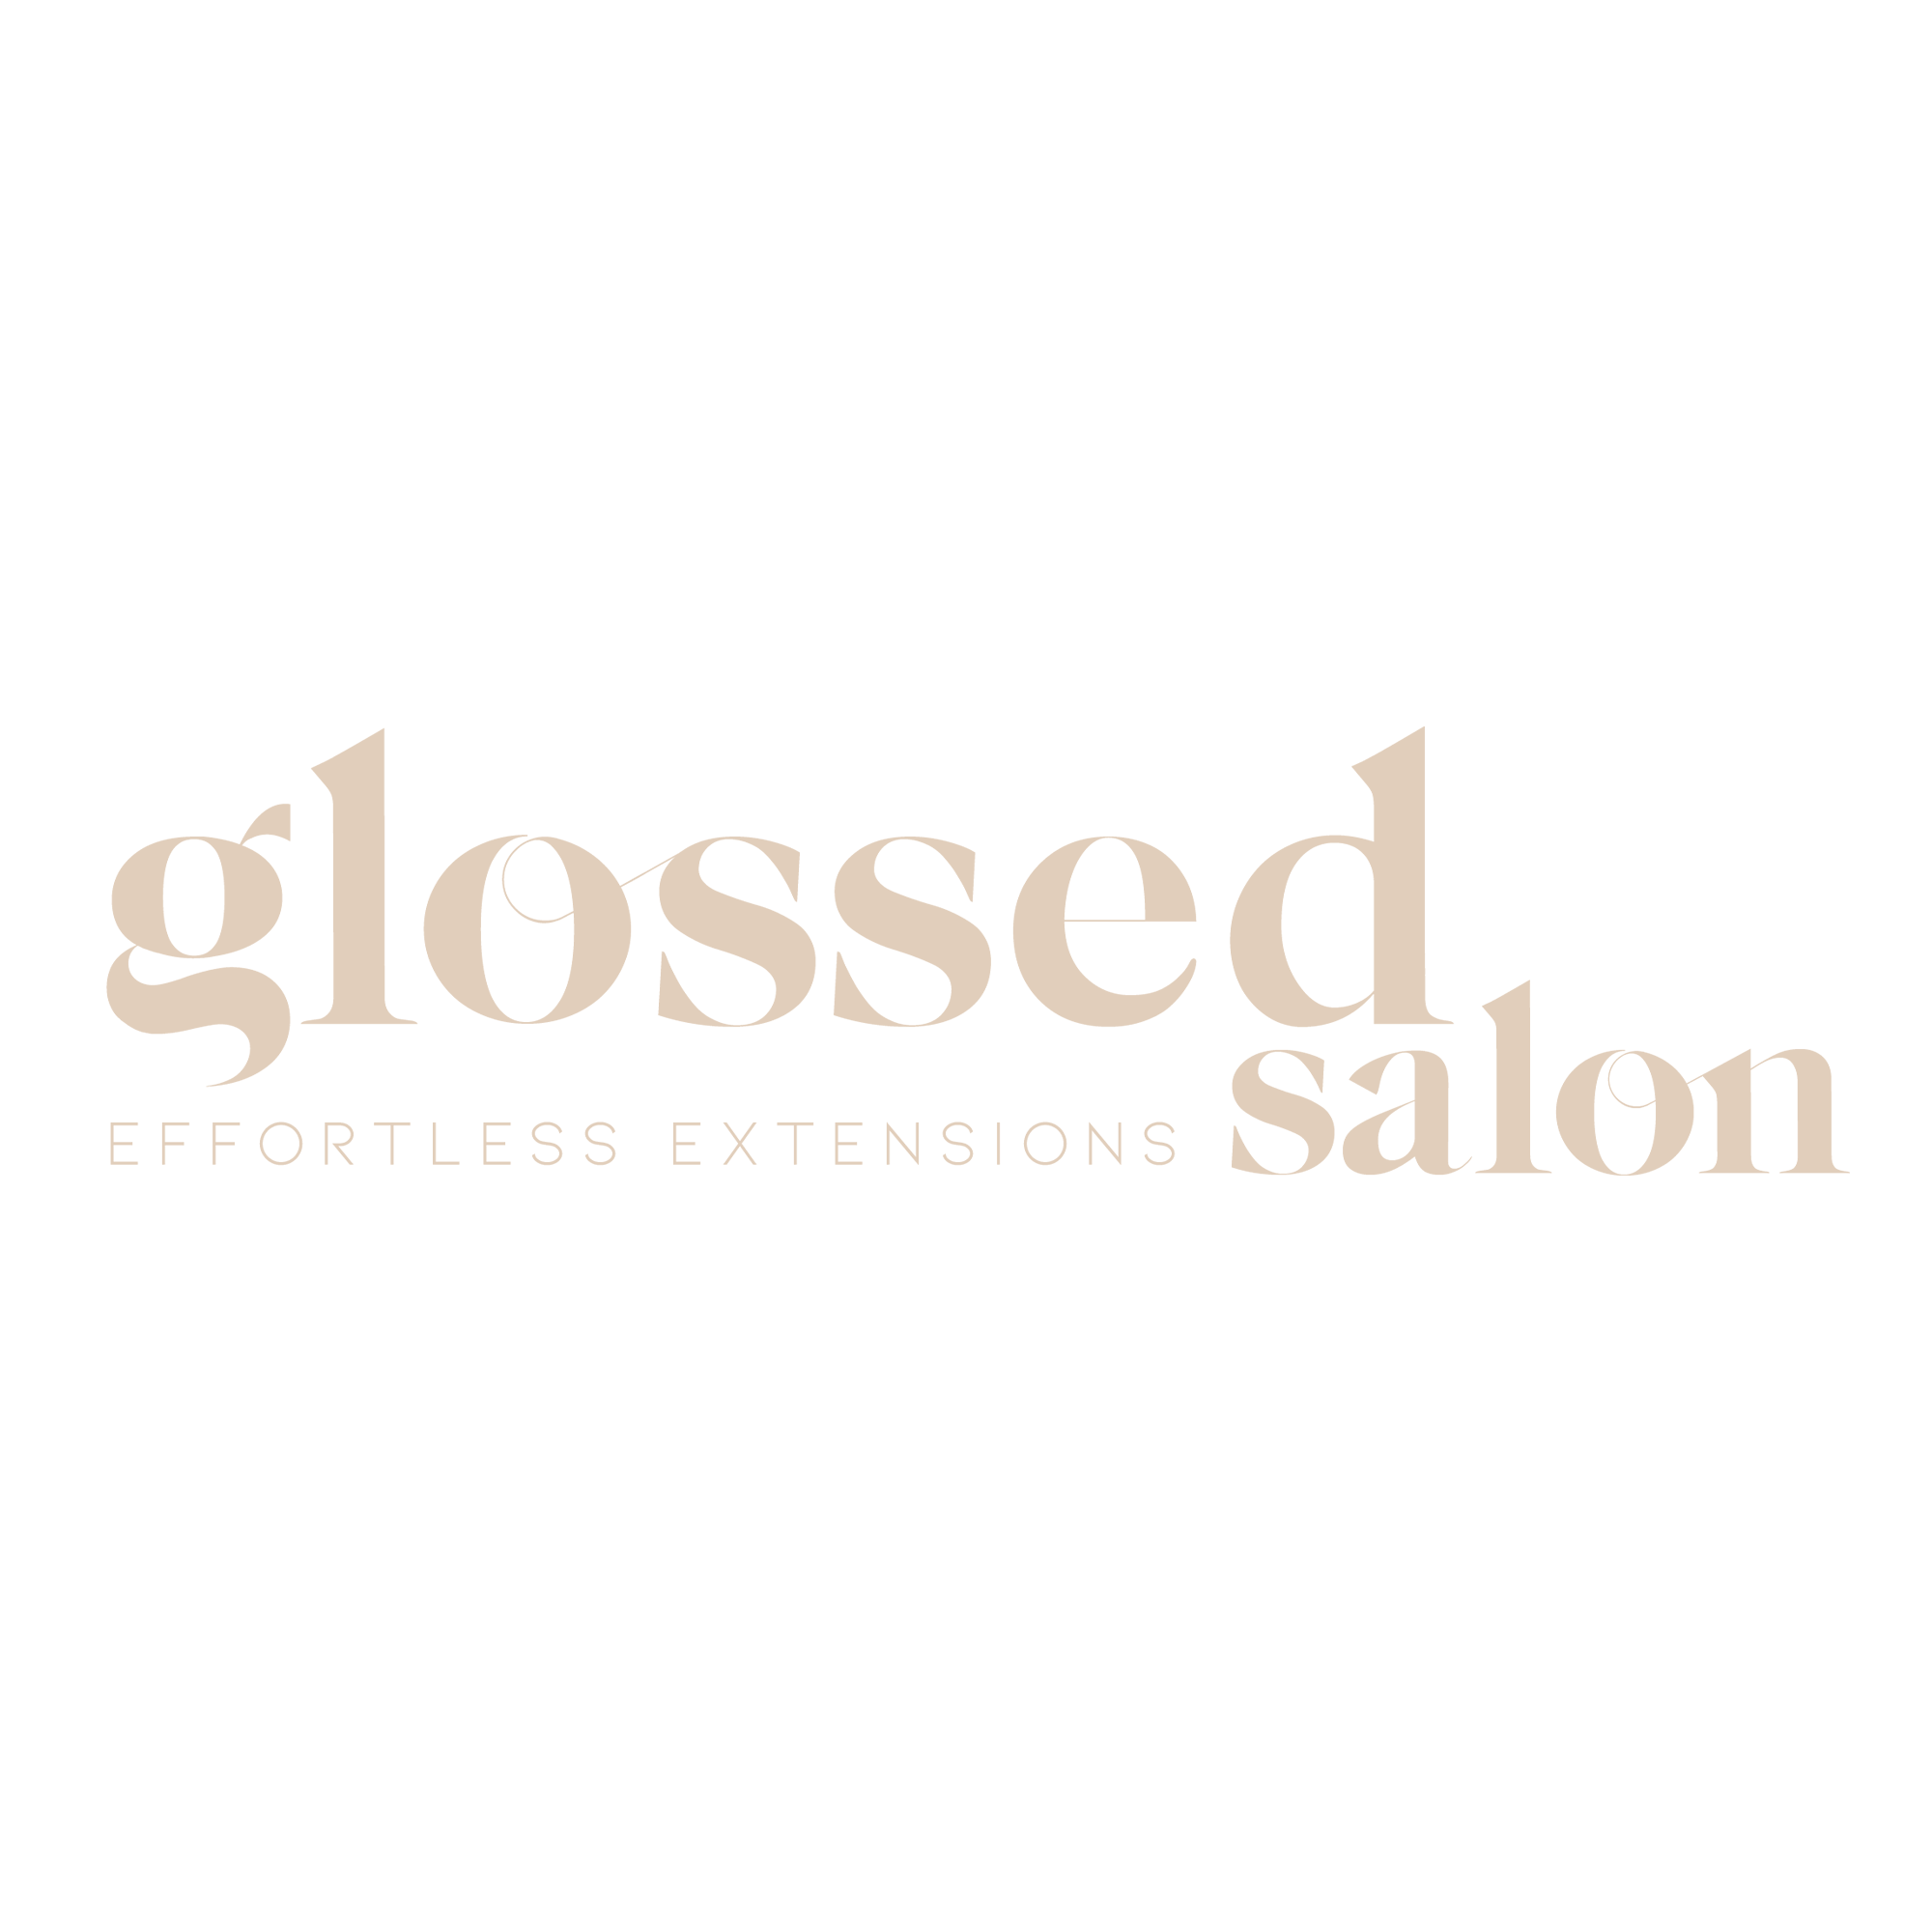 Glossed Salon